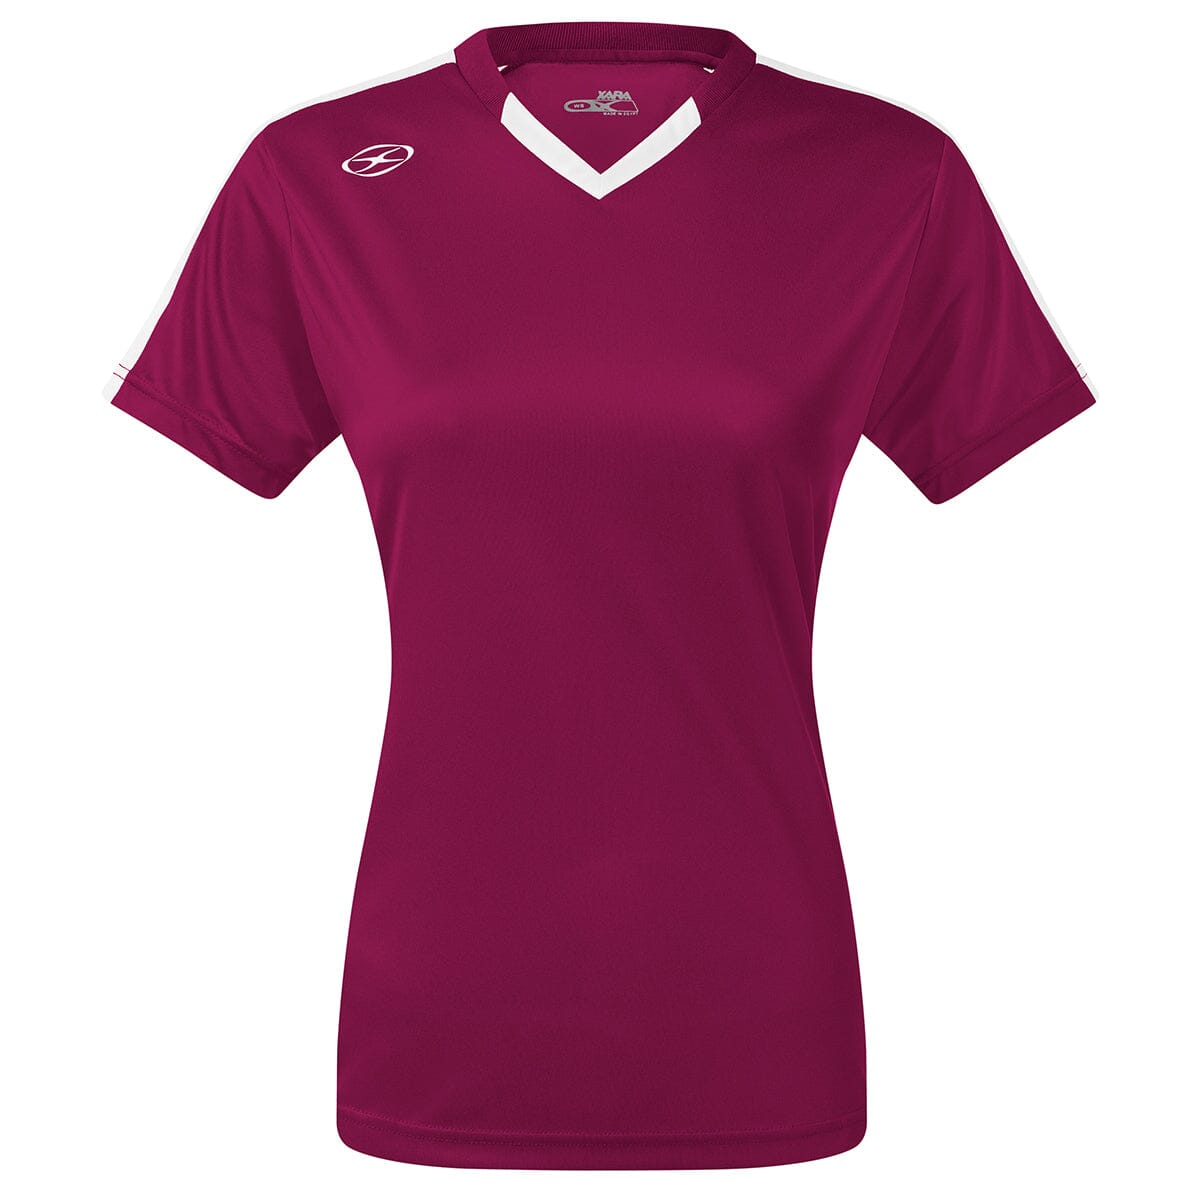 Britannia Jersey - Home Colors - Female Shirt Xara Soccer Maroon/White Womens Large 